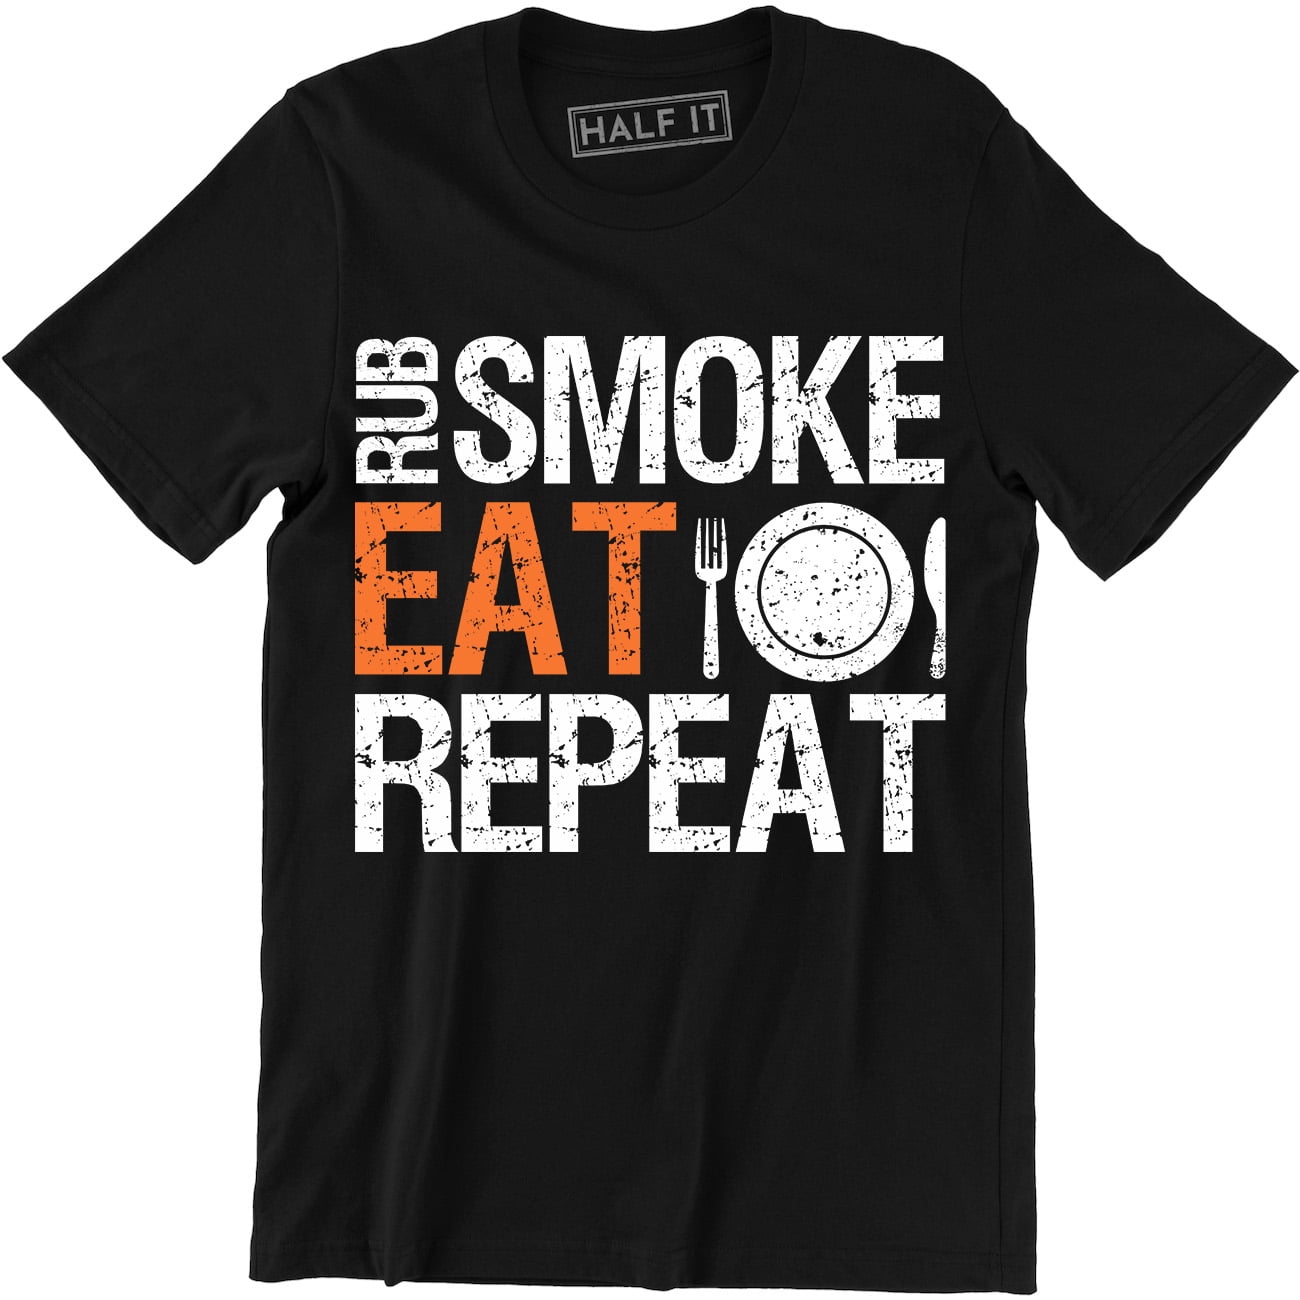 Chef Shirt Cooking Shirt Smoking Meat Shirt I'd Smoke That Cow Pig Chicken Shirt